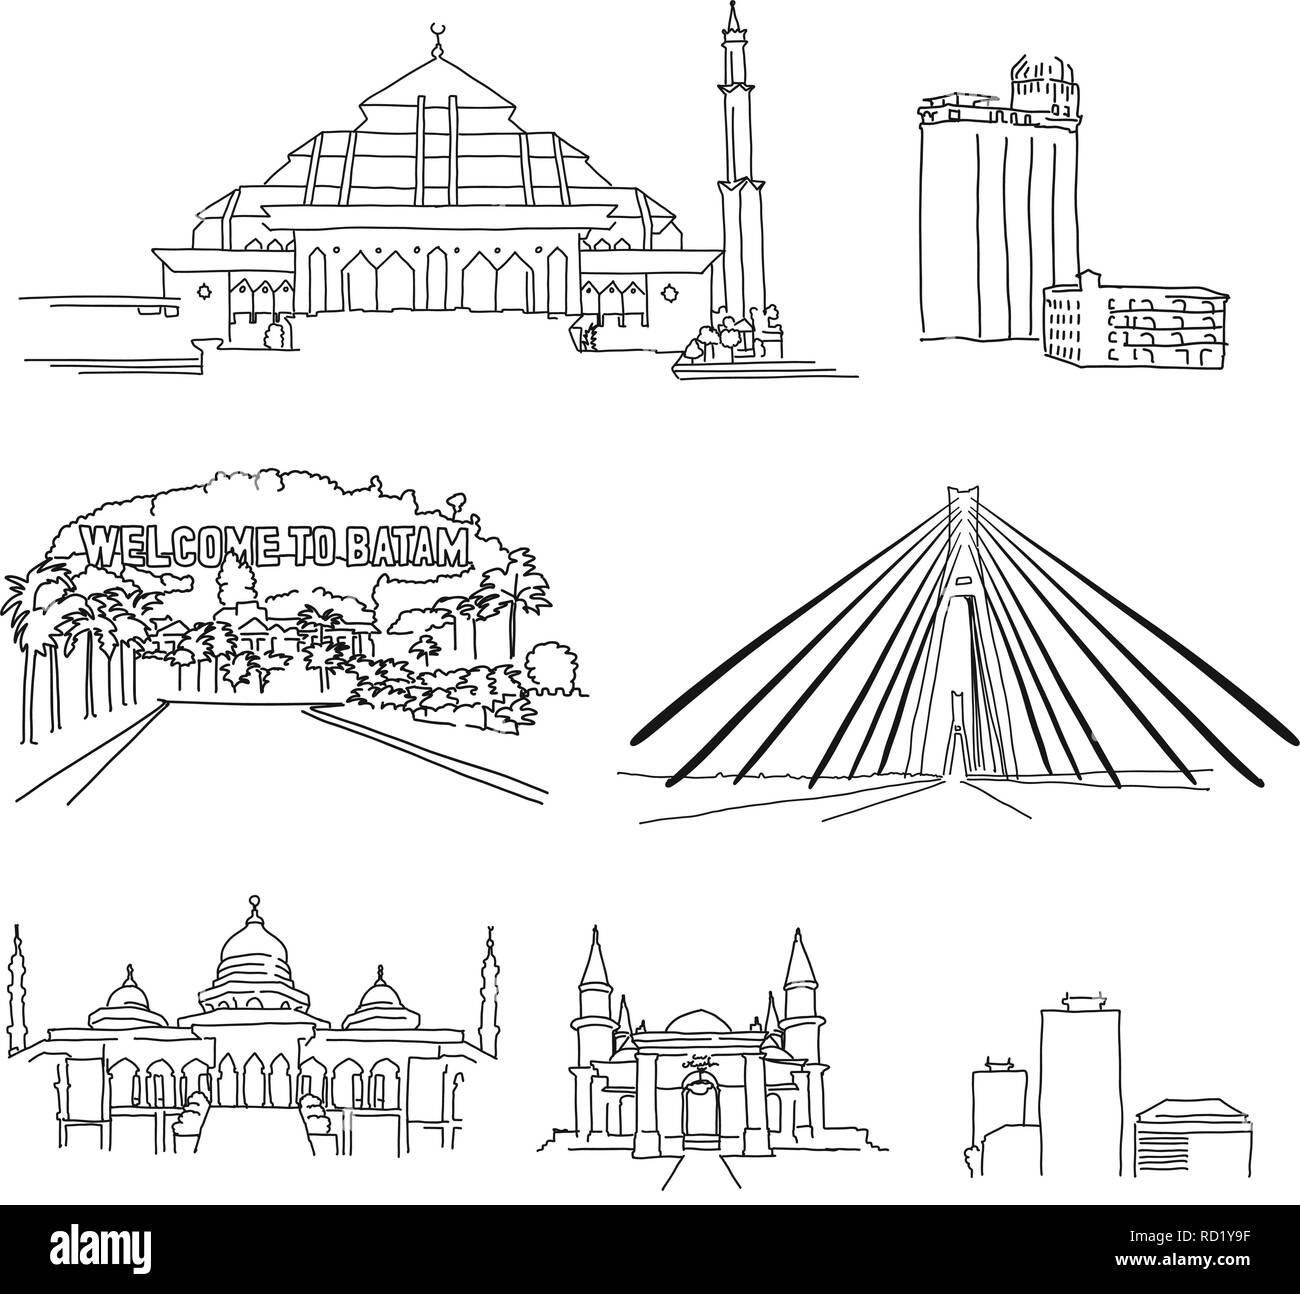 Batam famous architecture outlines. Hand-drawn vector illustration. Famous travel destinations series. Stock Vector